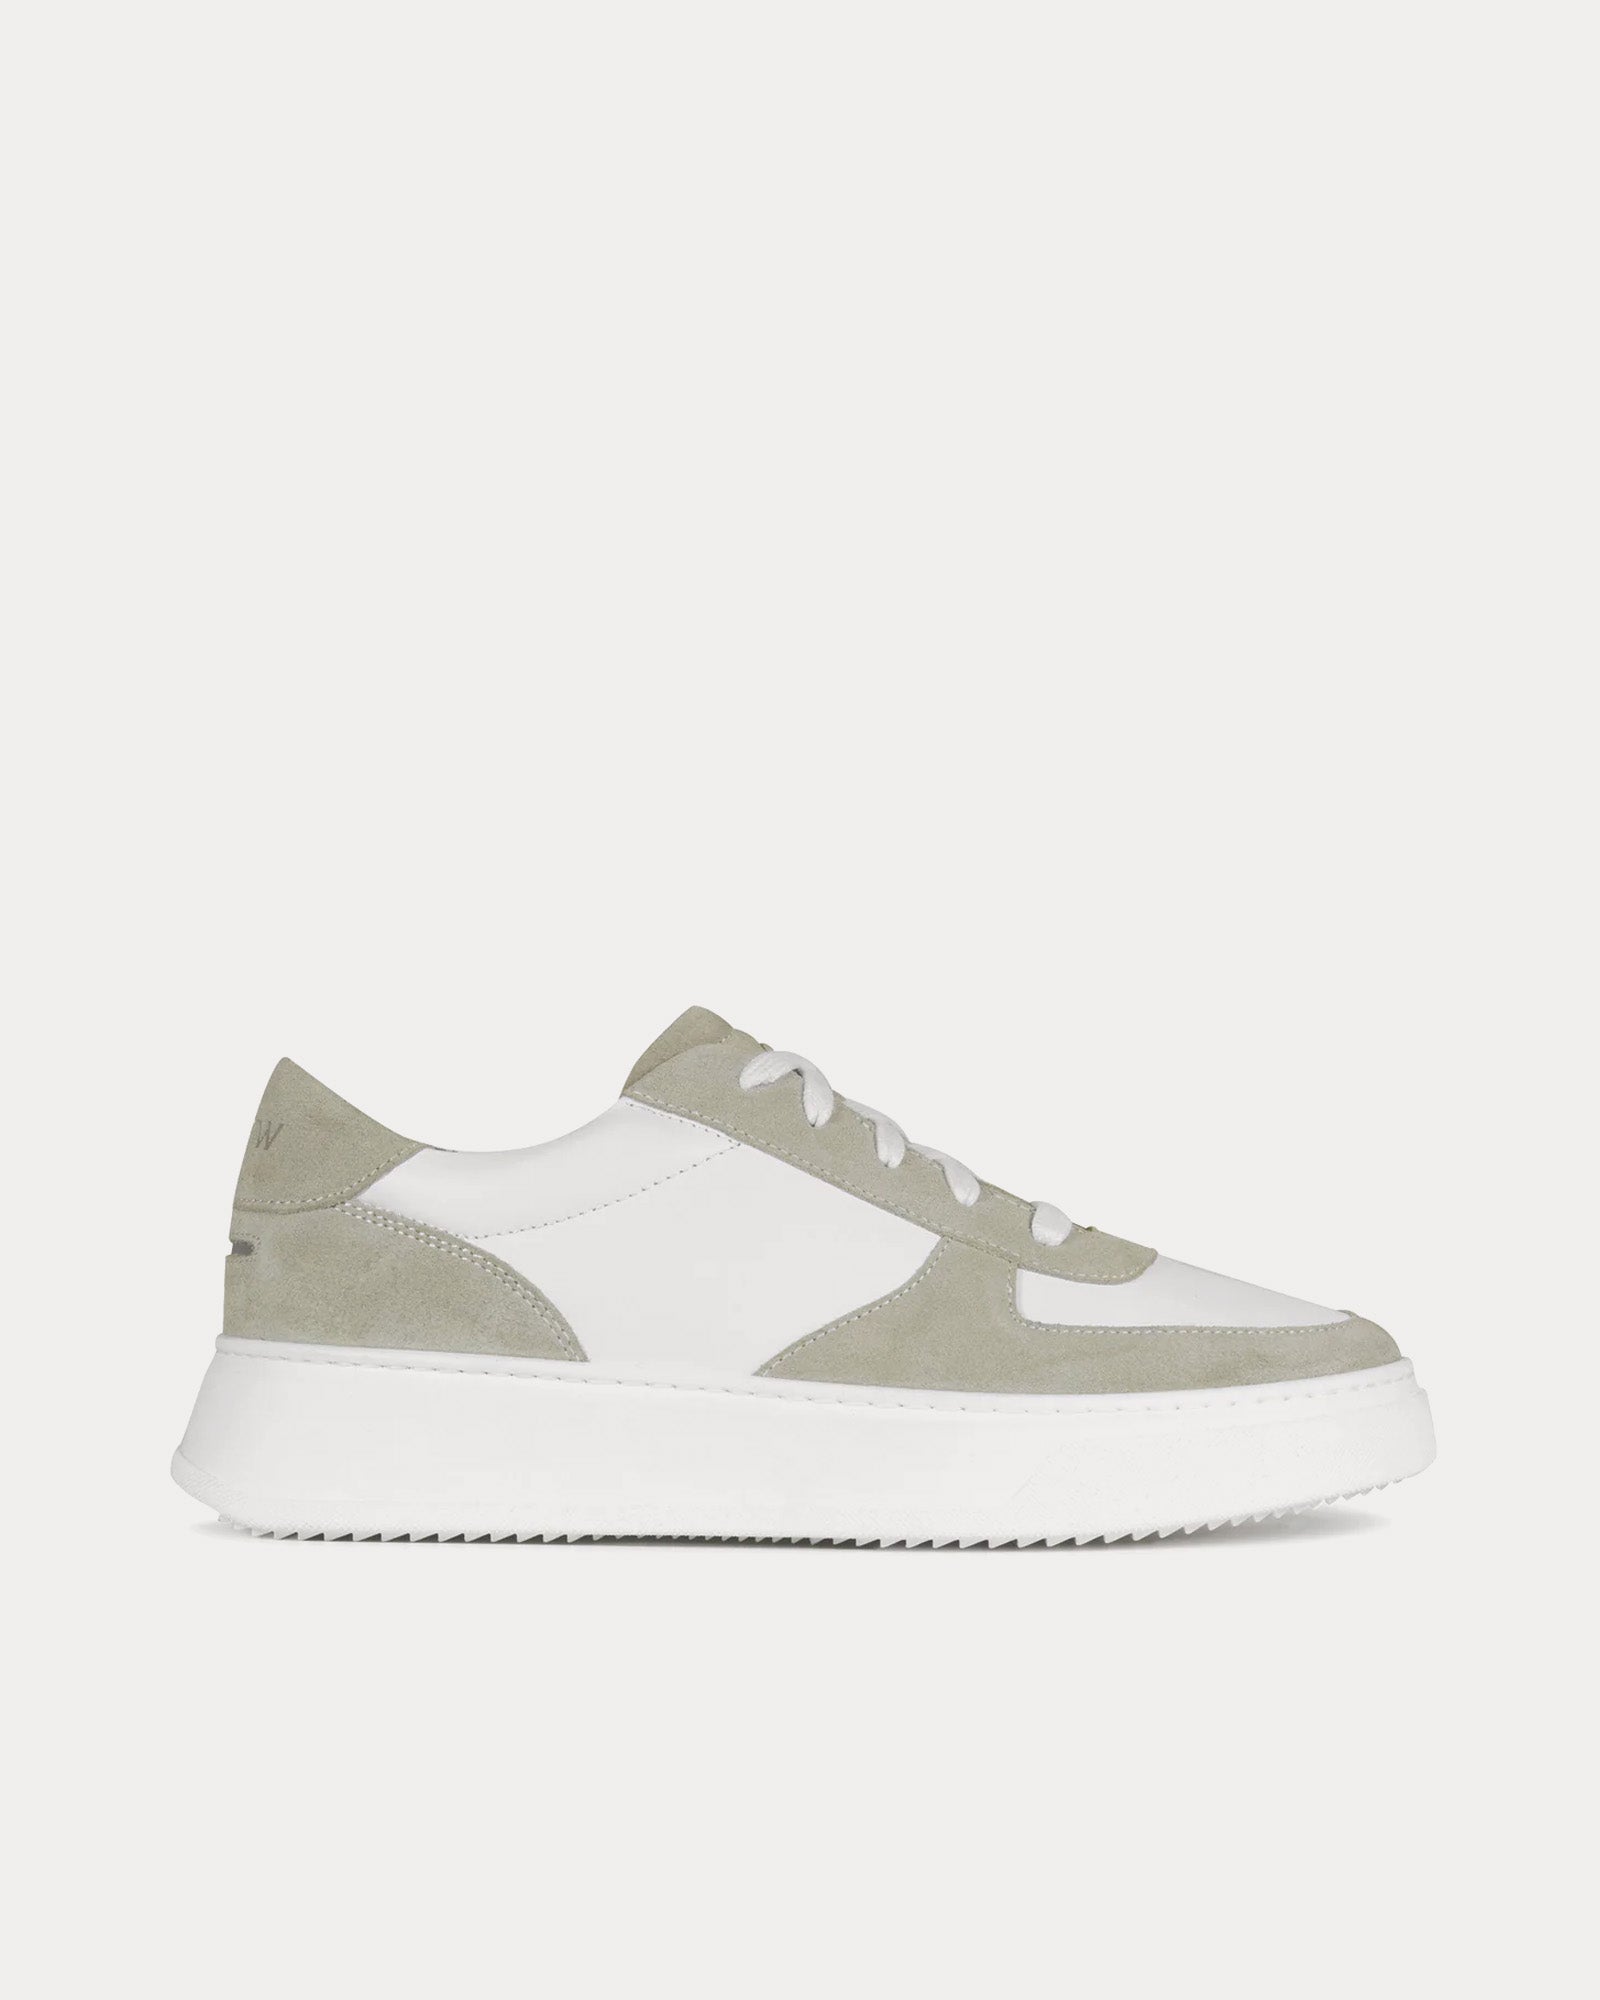 Unseen Footwear - Marais Leather & Suede Beige / White Low Top Sneakers